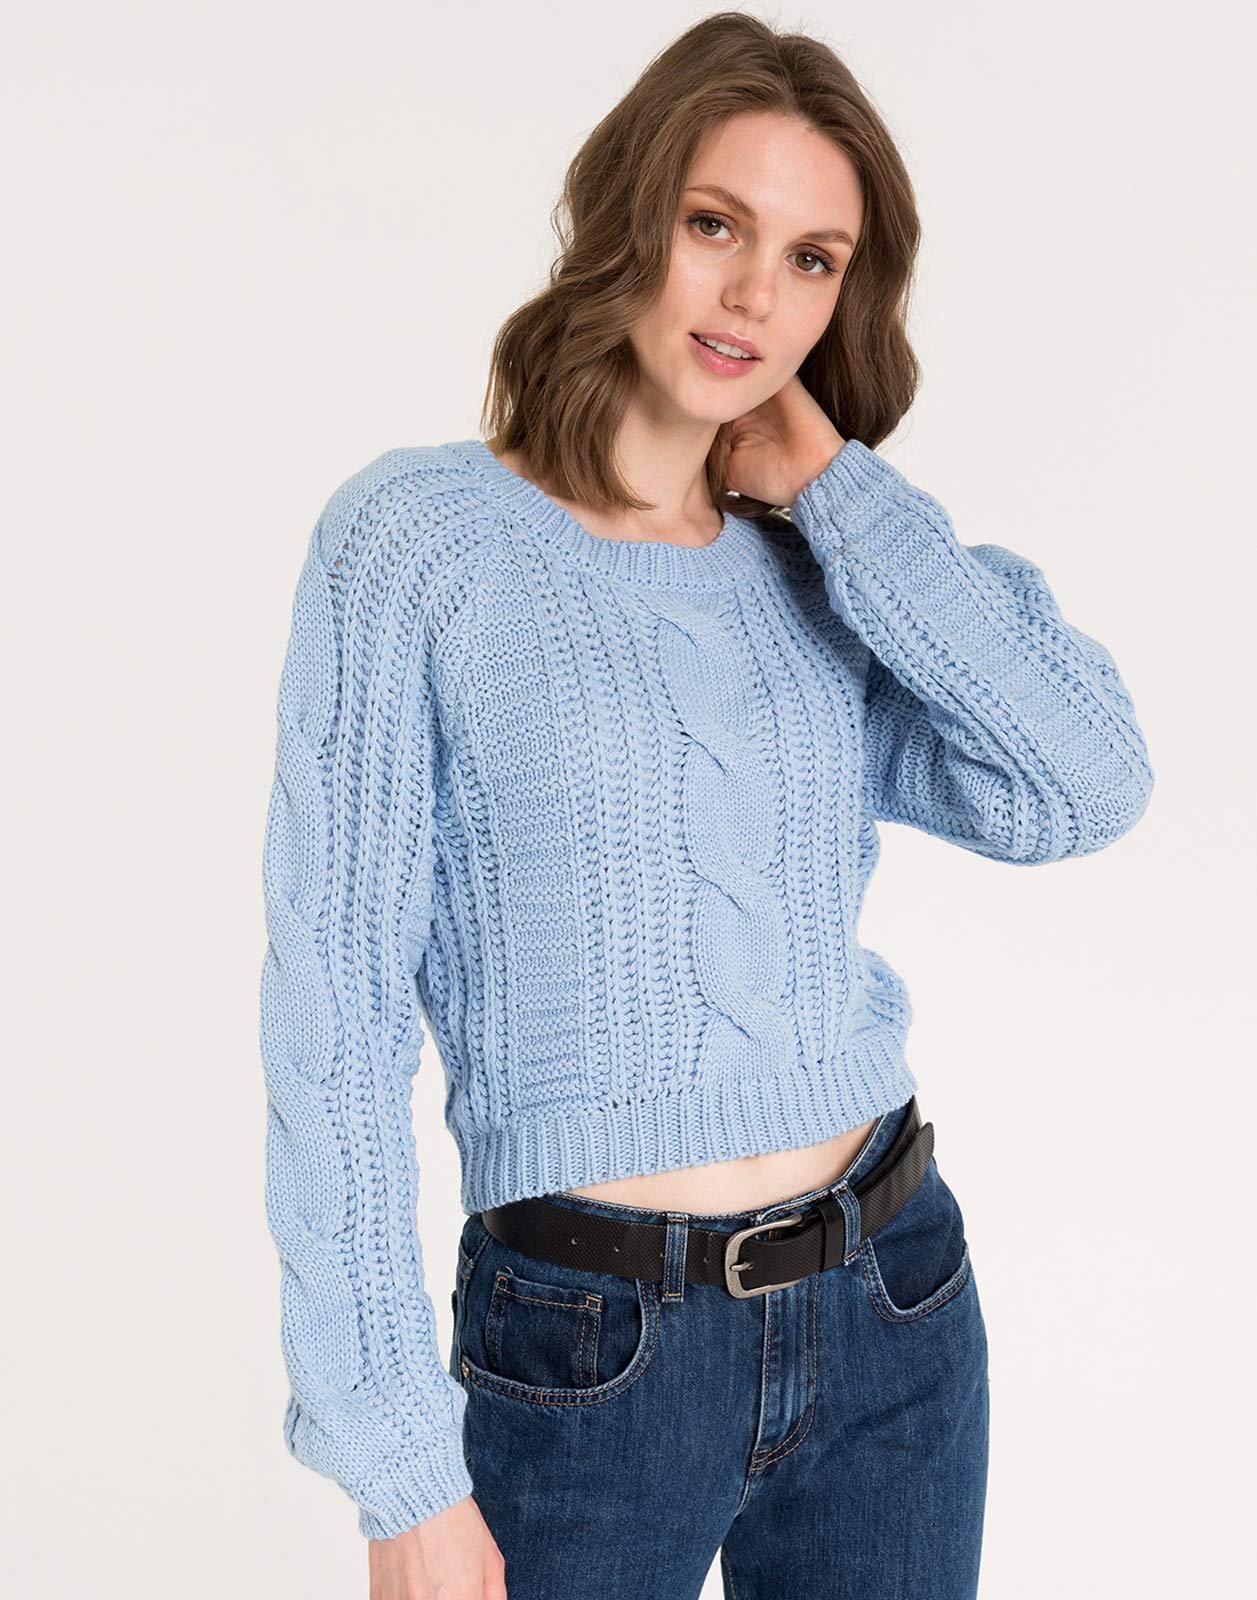 Каталог джемперов. Пуловер Gloria Jeans голубой. Голубой свитер.